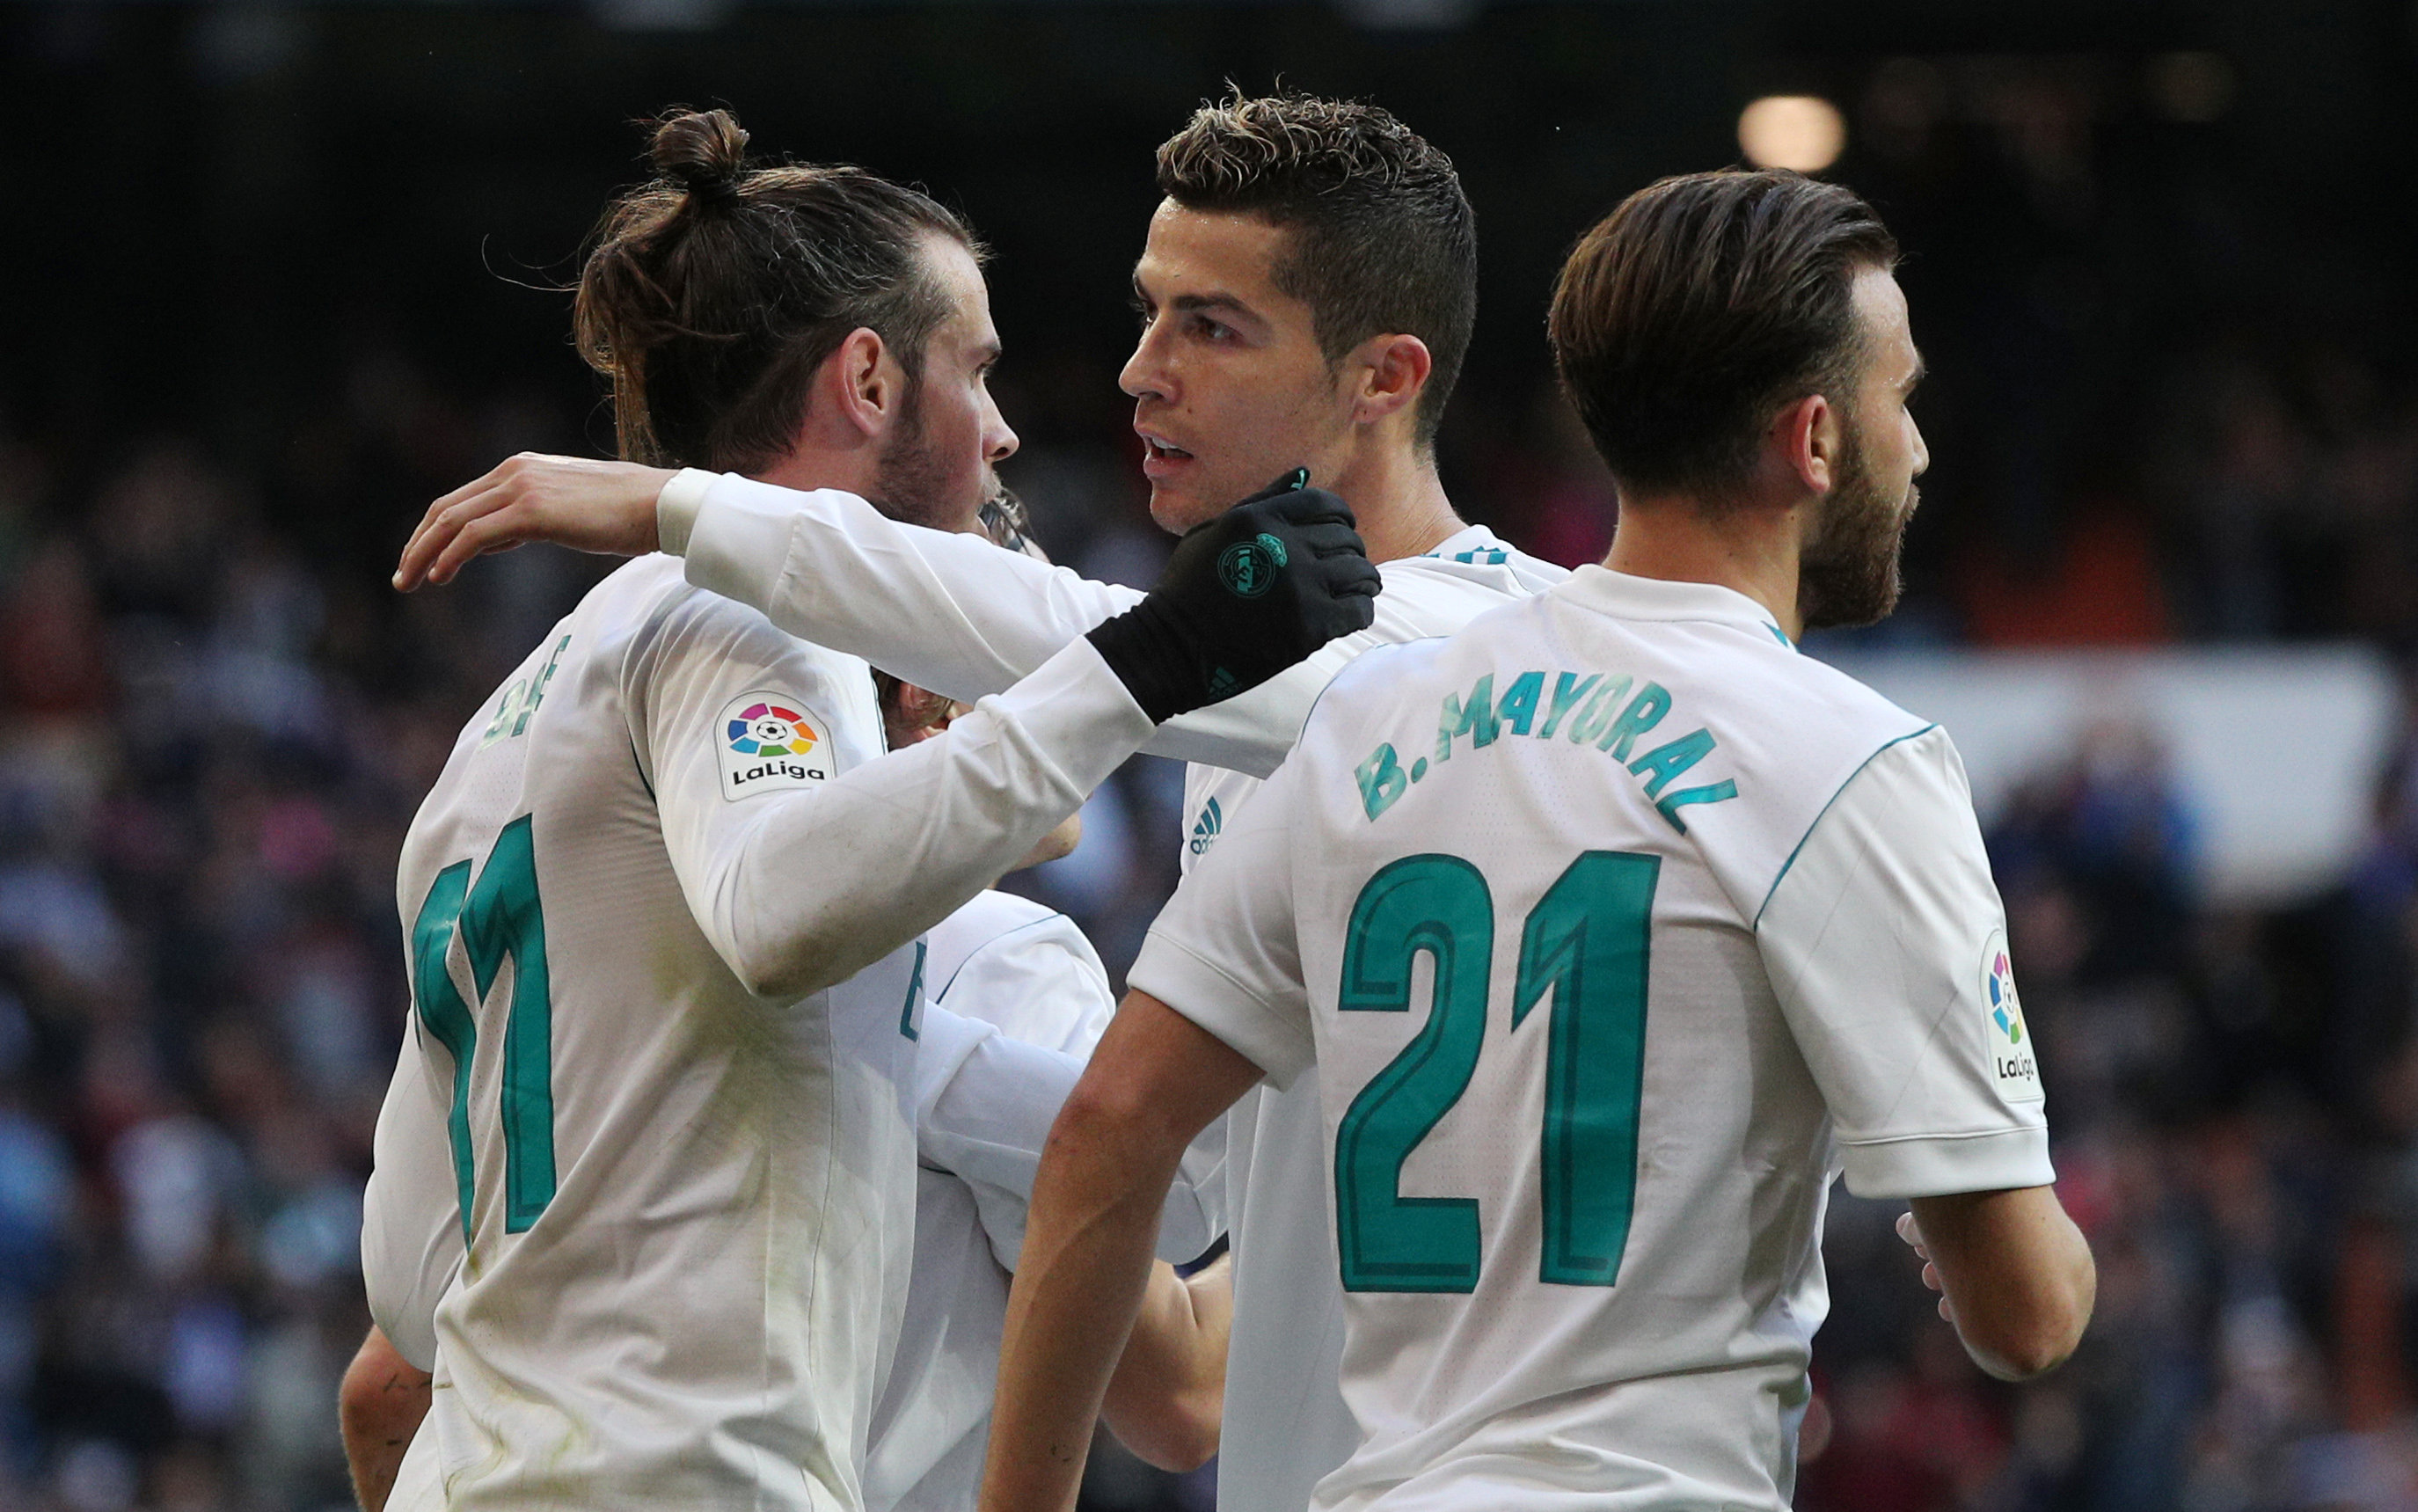 ¡Salió de la mala racha! Real Madrid golea 7-1 al Deportivo de la Coruña